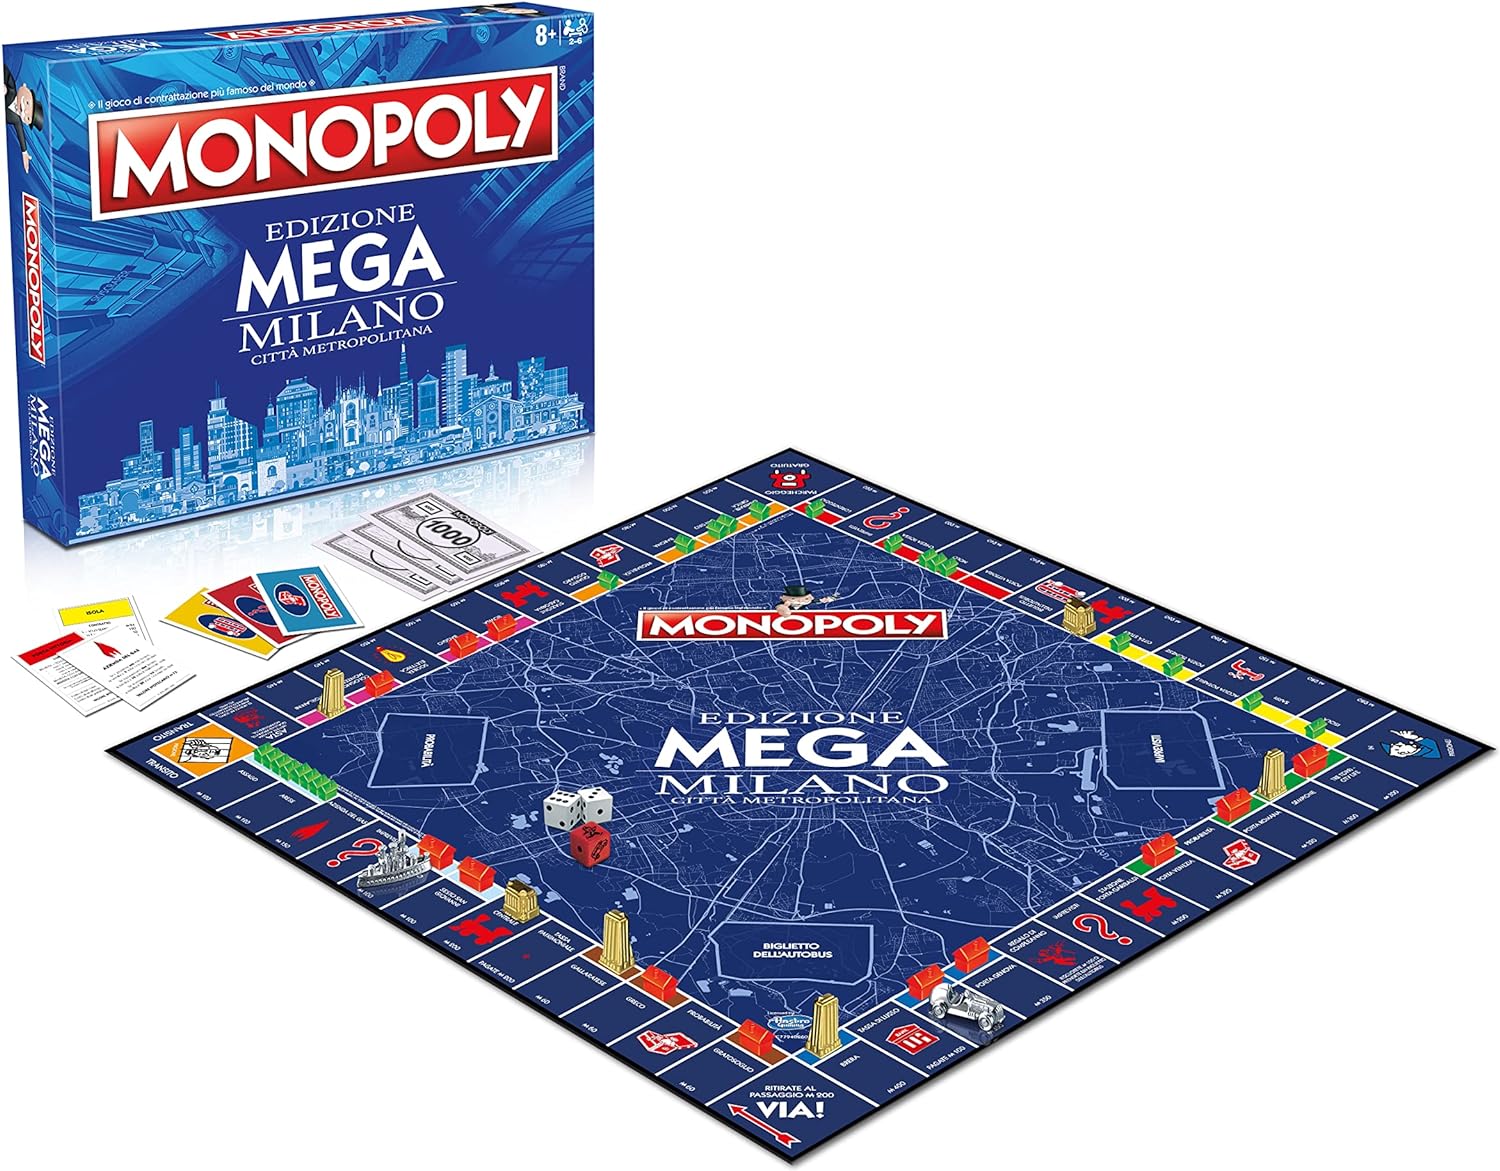 MONOPOLY - MEGA EDITION MILAN METROPOLITAN CITY